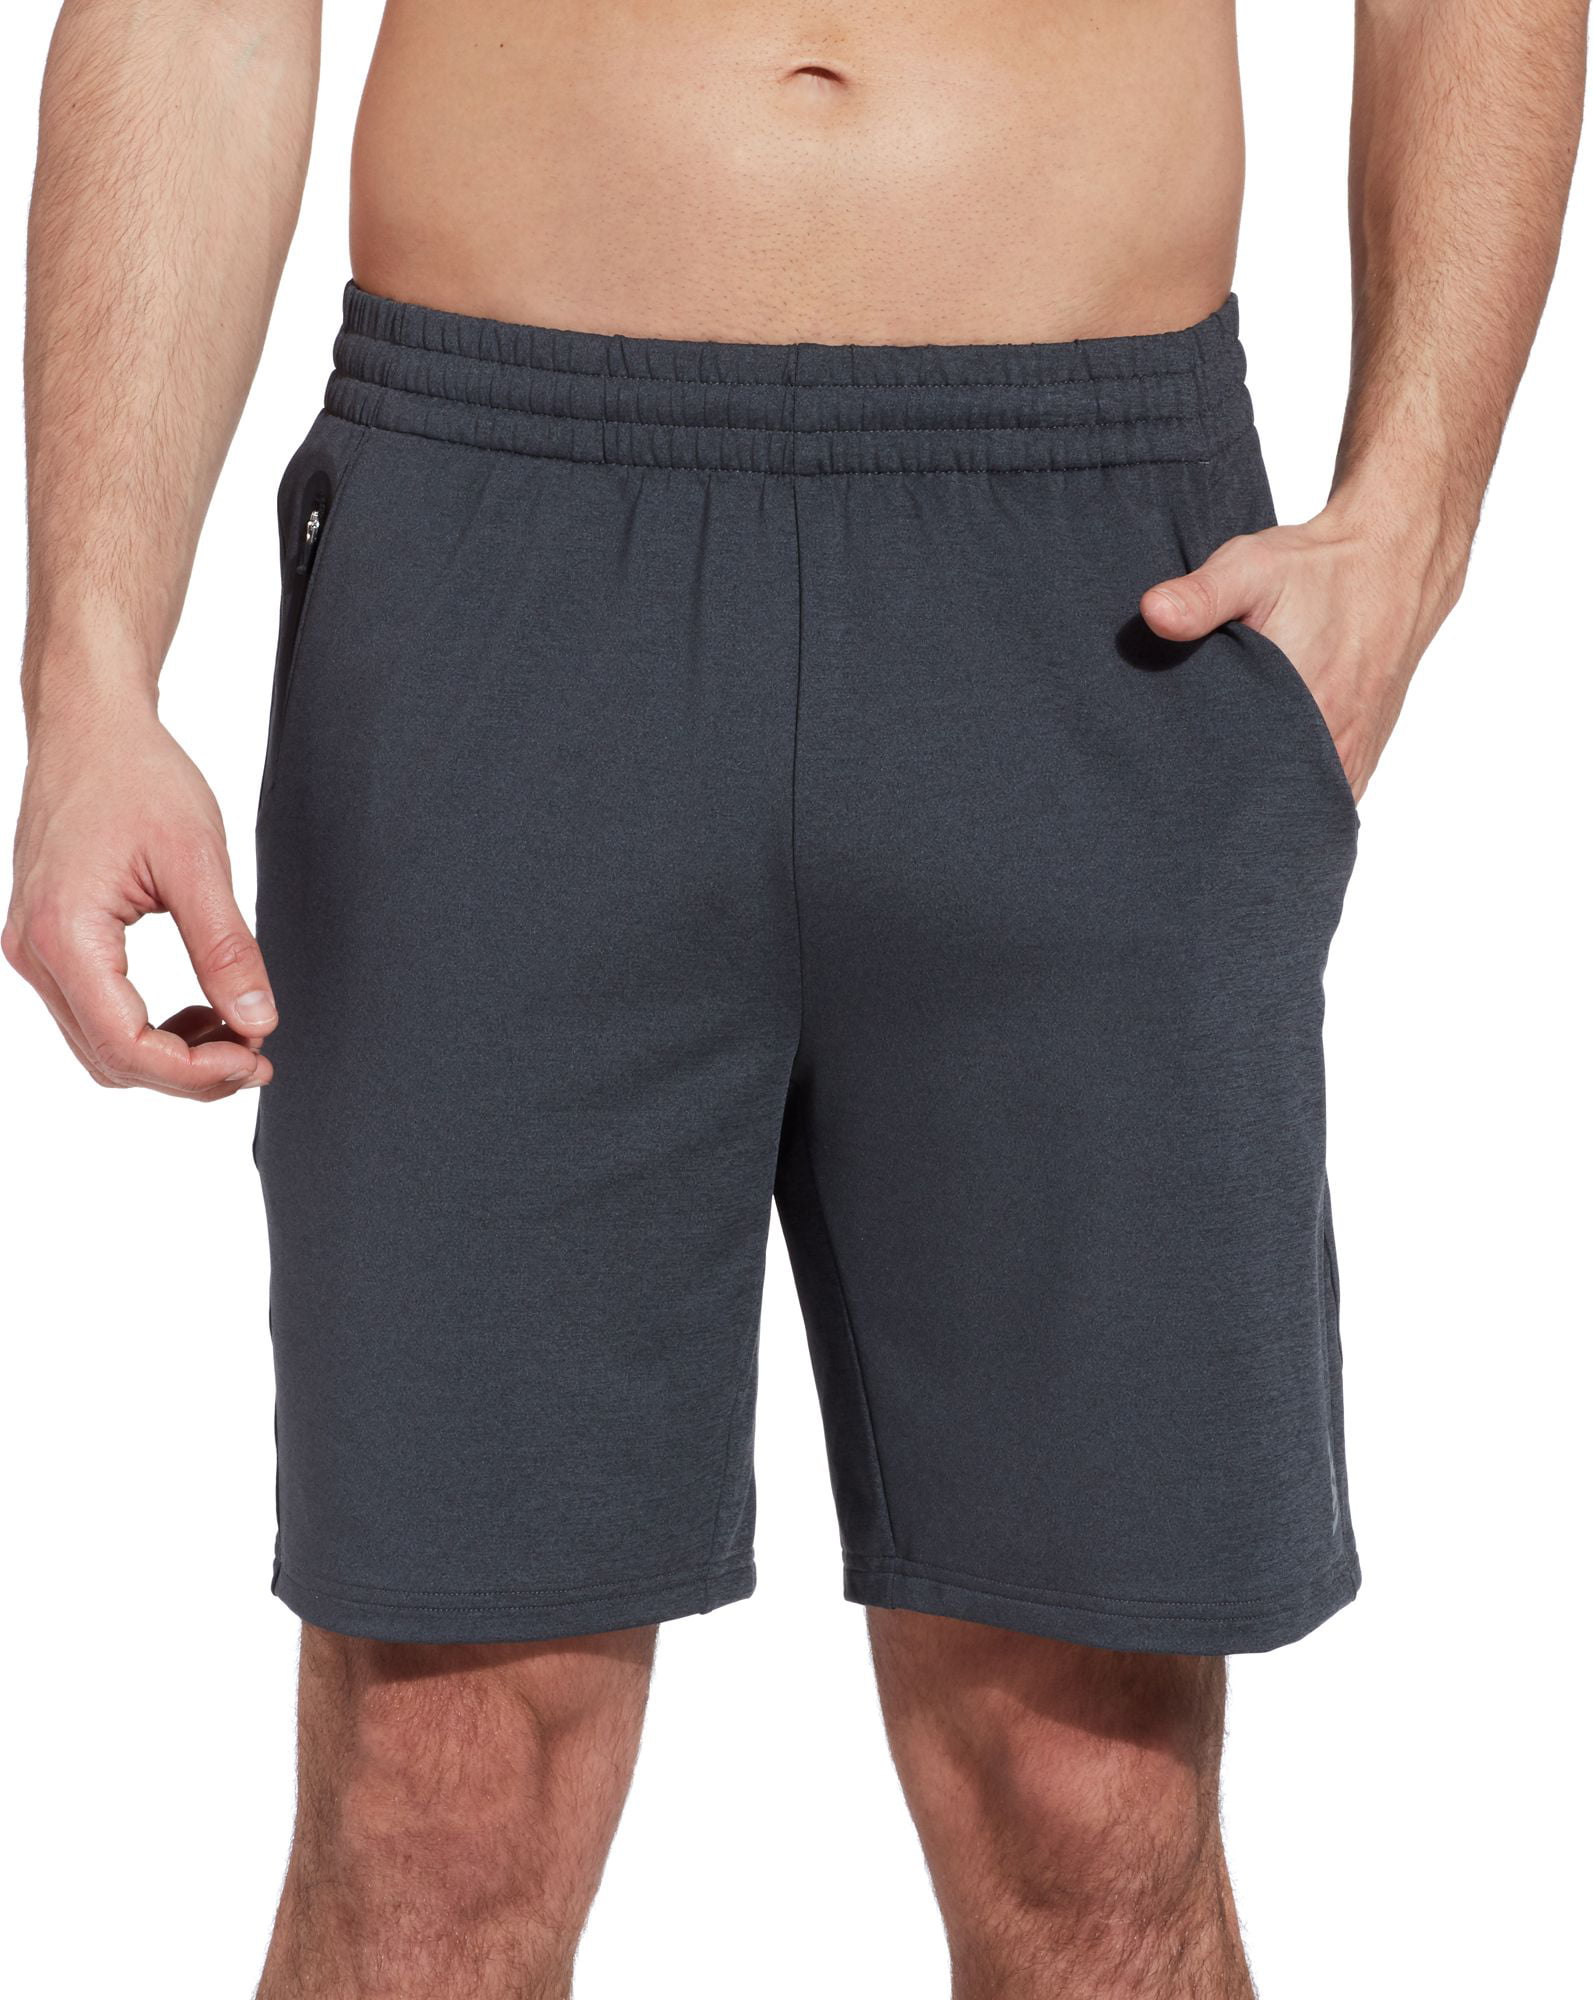 Second Skin - SECOND SKIN Men's Training Knit Shorts - Walmart.com ...